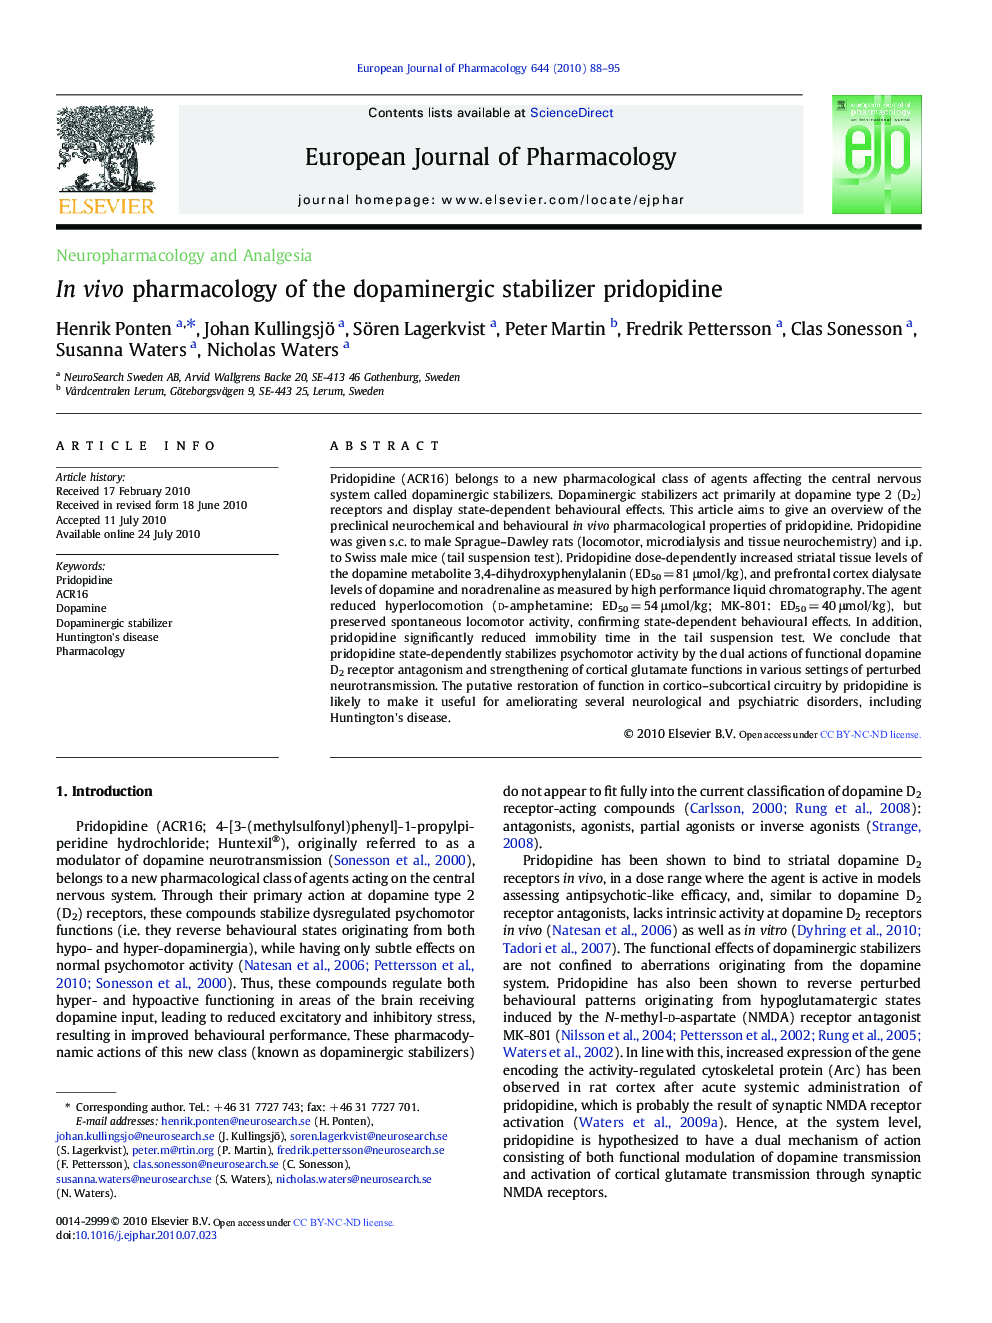 Neuropharmacology and AnalgesiaIn vivo pharmacology of the dopaminergic stabilizer pridopidine